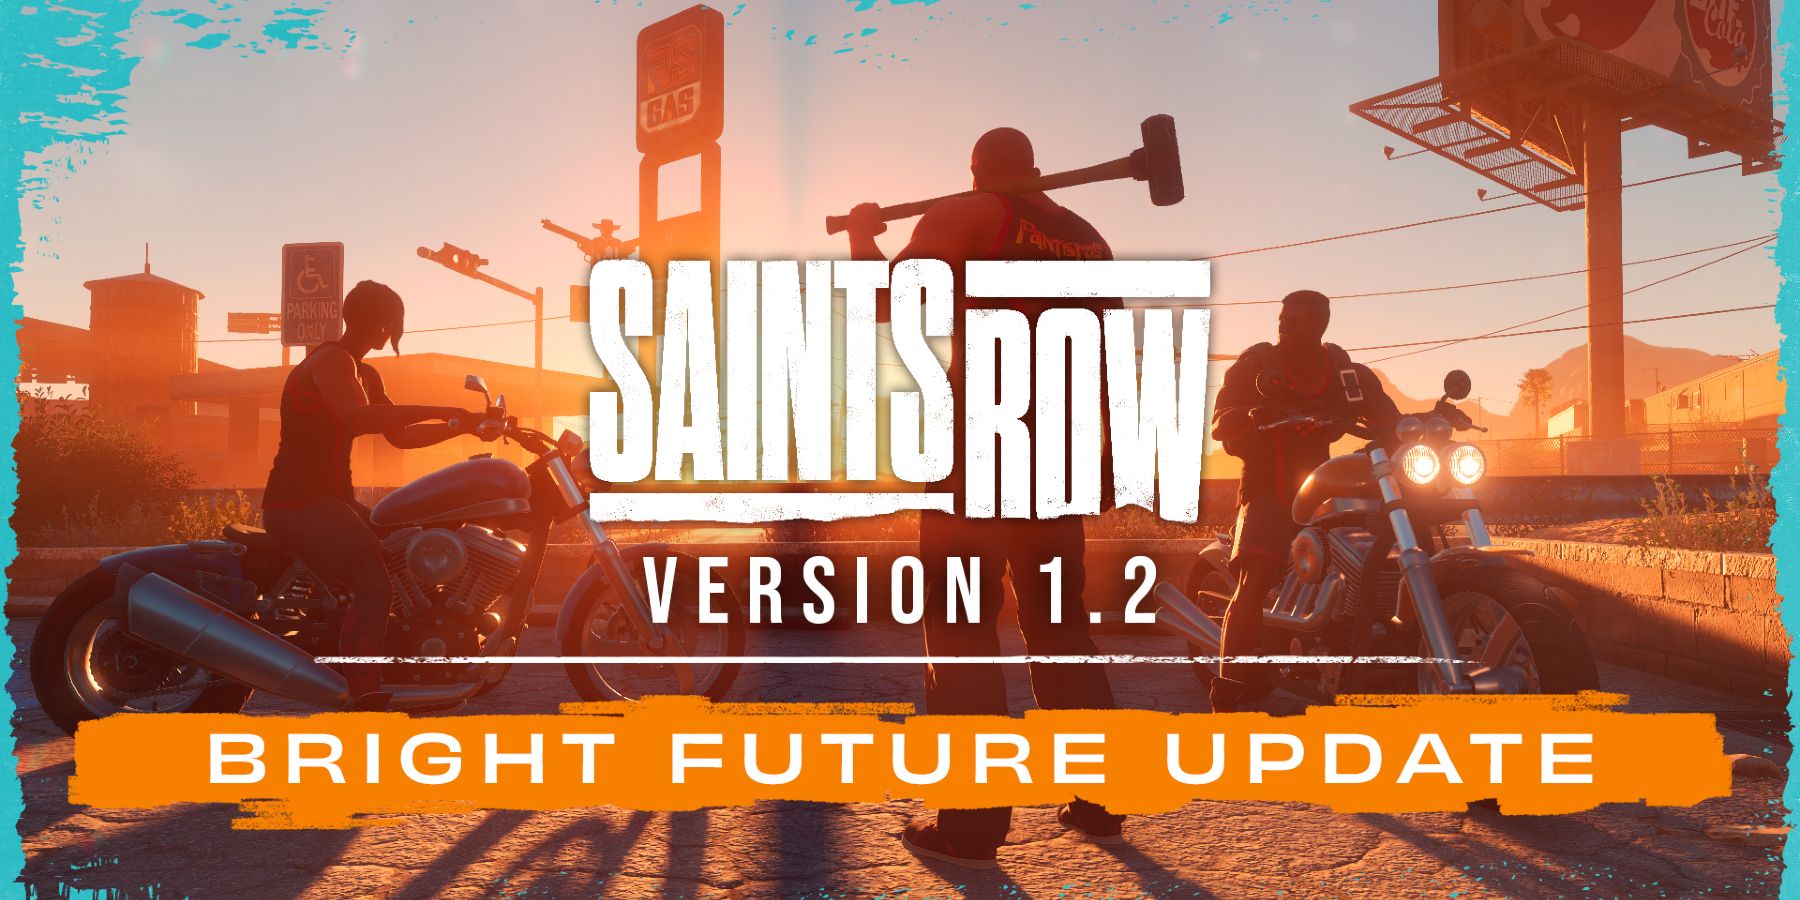 saints row bright future version 1.2 update bug fix